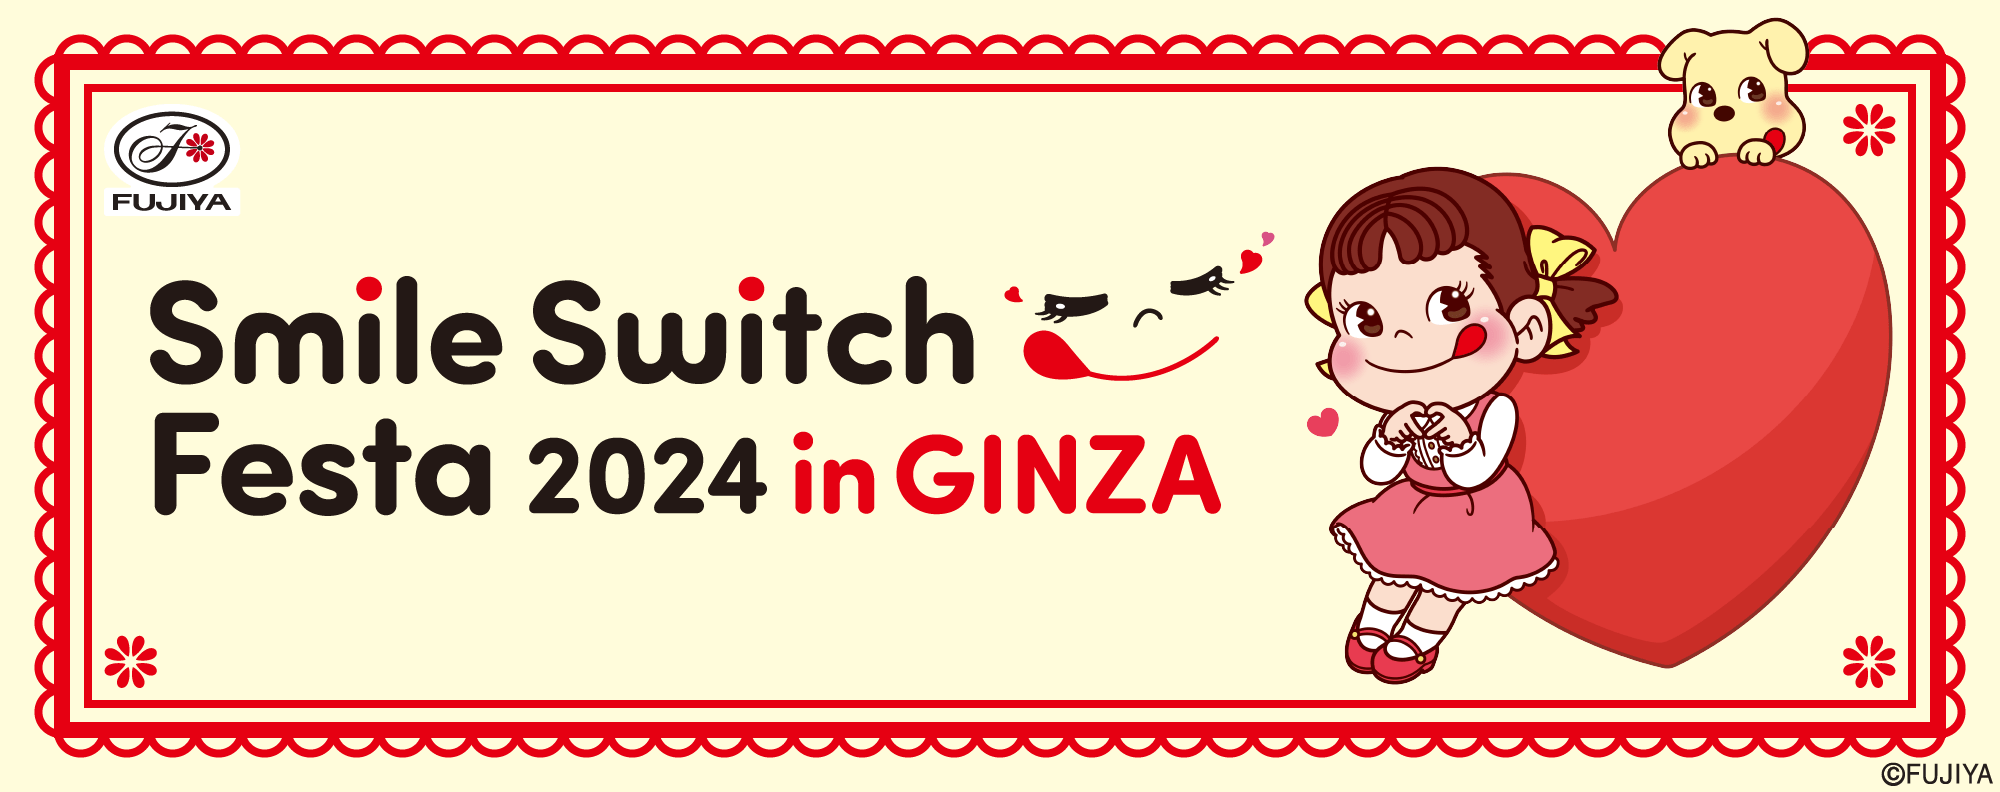 Smile Switch Festa 2024 in GINZA